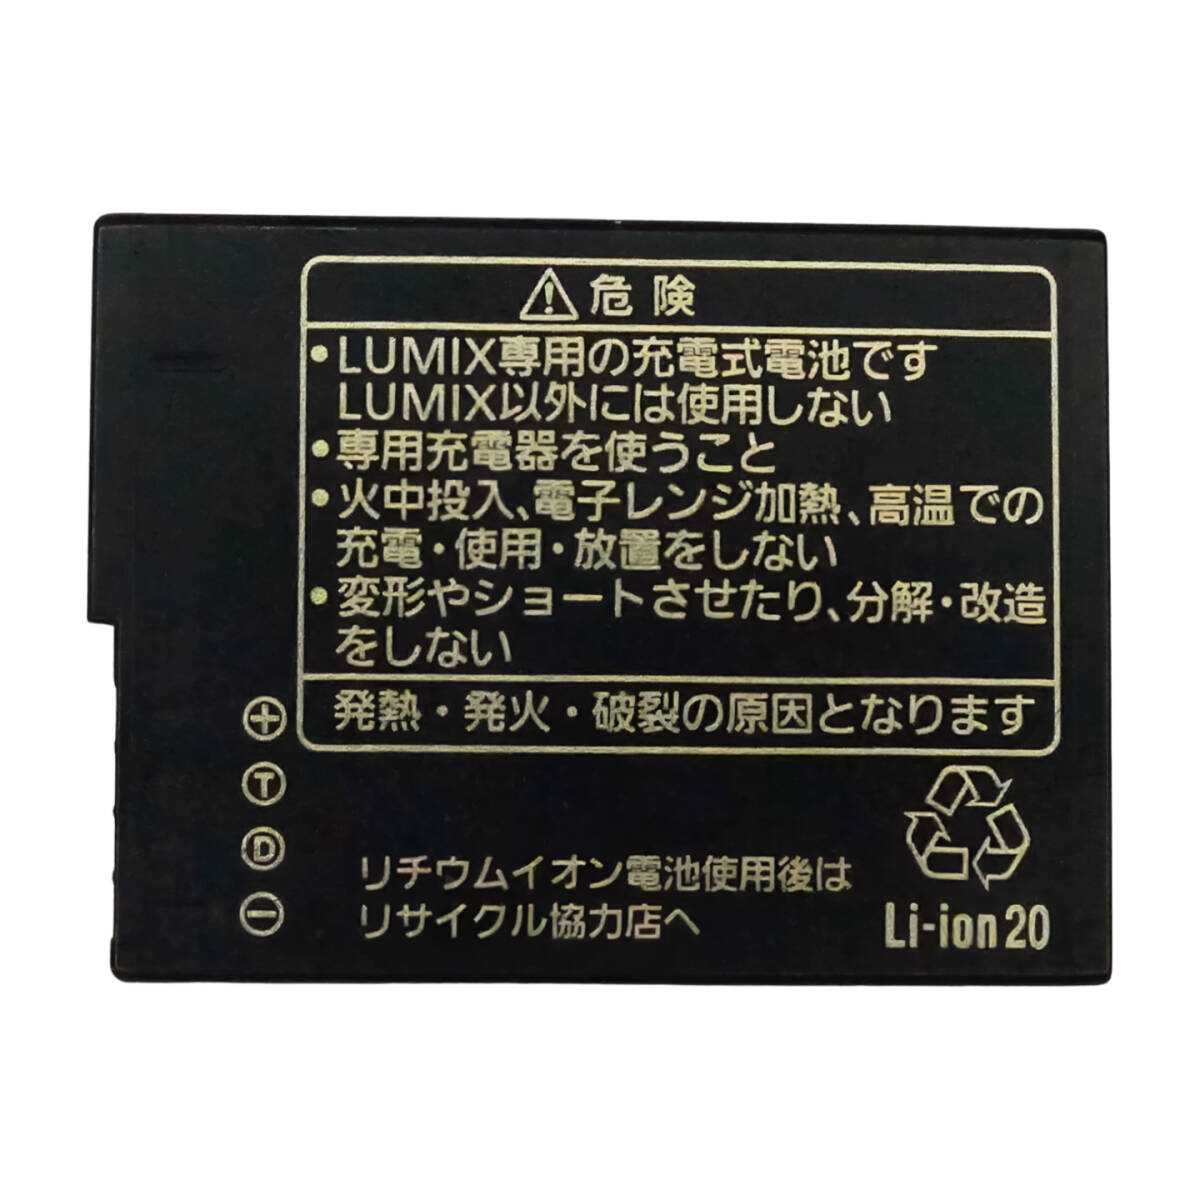 **Panasonic LUMIX battery pack DMW-BLC12 used junk **